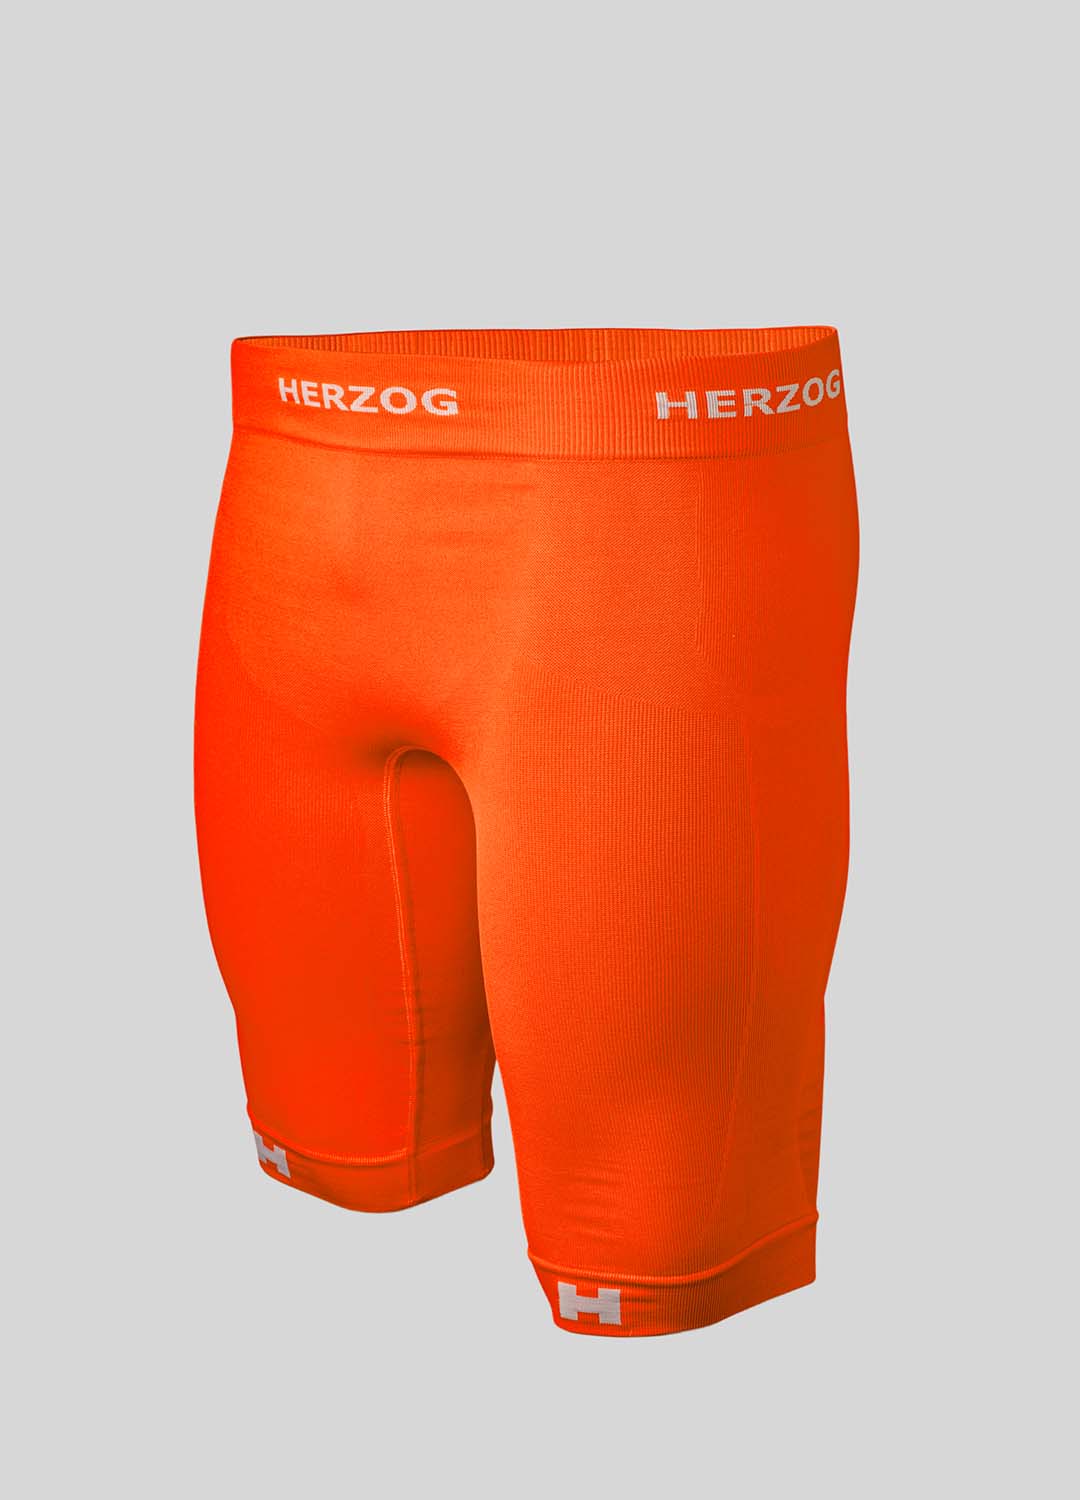 Shop your orange Herzog PRO Sport Compression Shorts